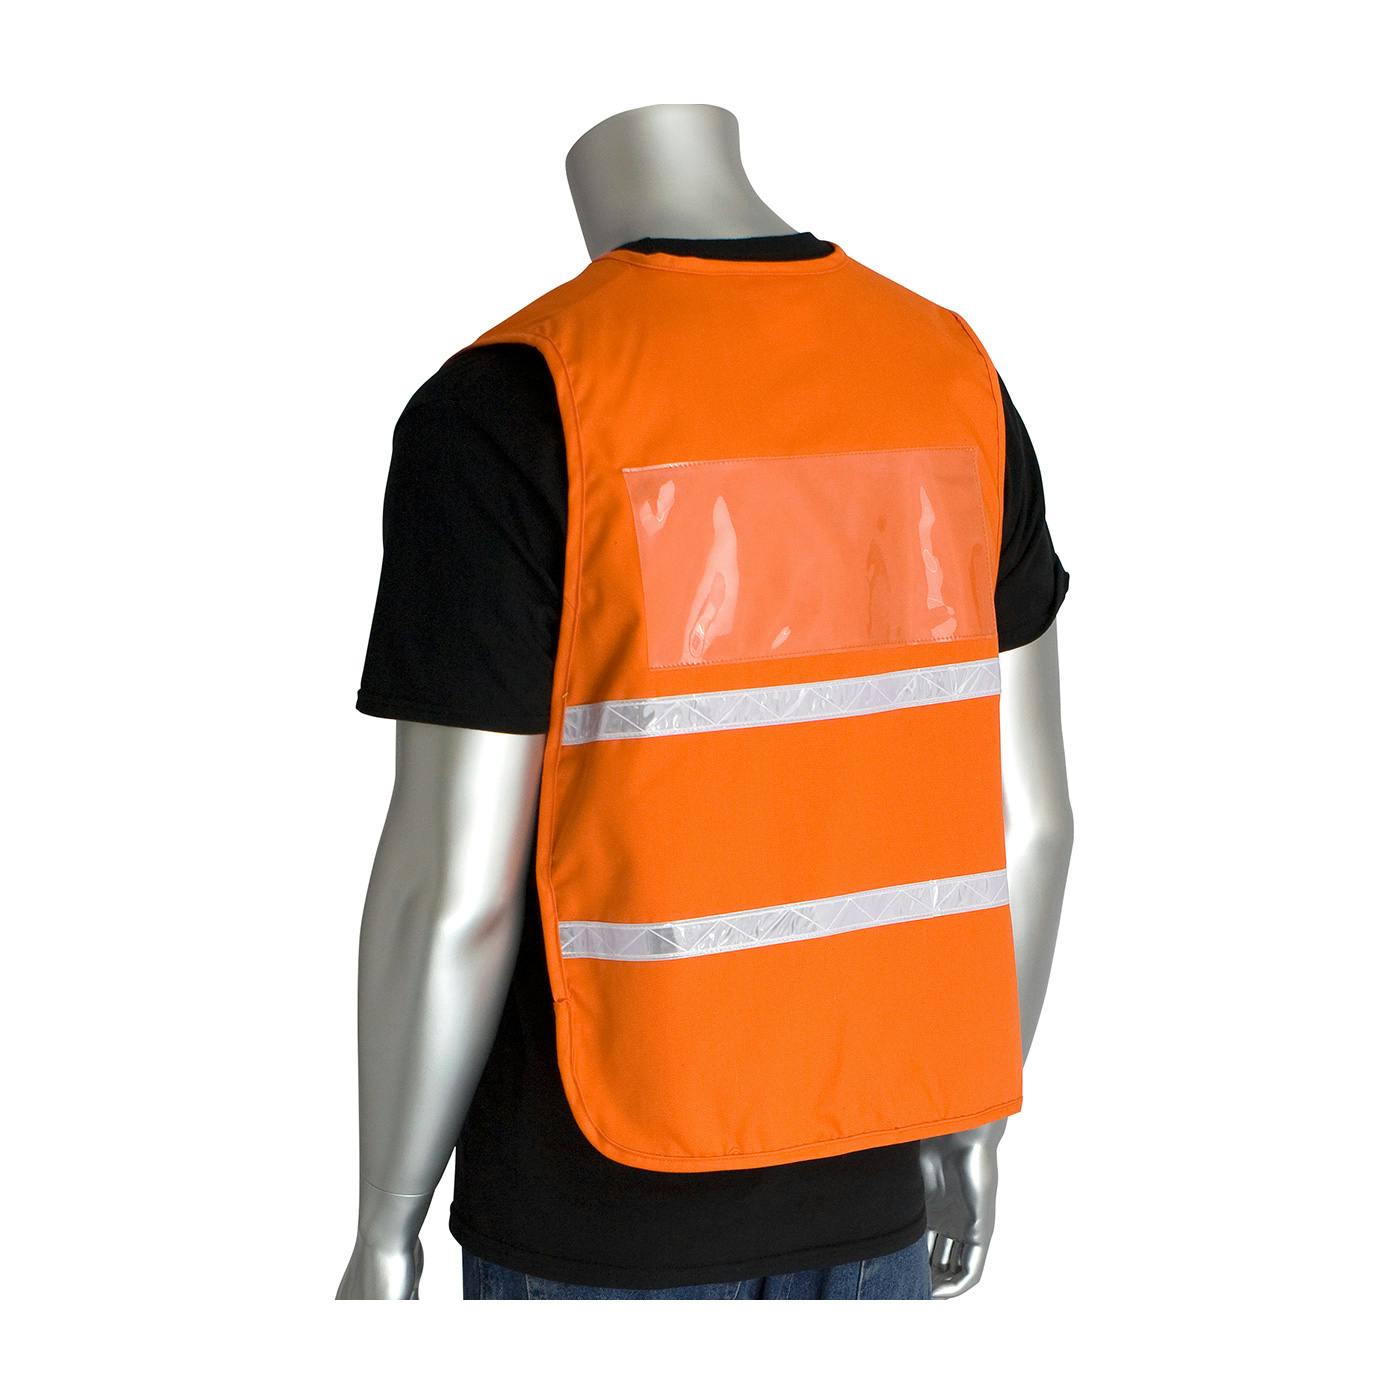 Non-ANSI Incident Command Vest - Cotton/Polyester Blend, Orange (300-2507)